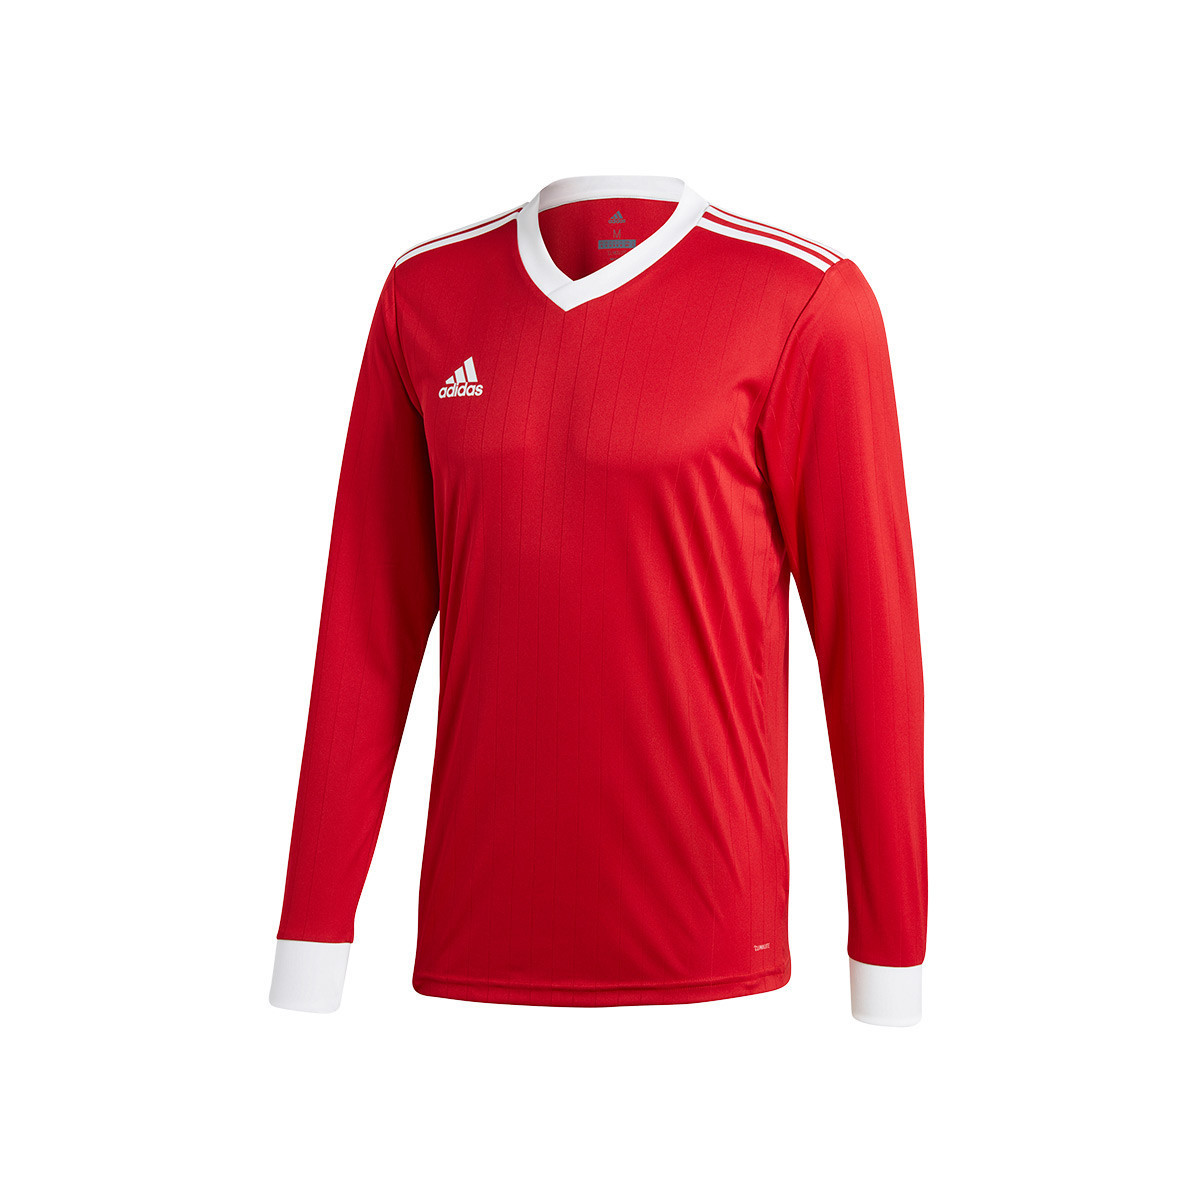 Camiseta adidas 18 m/l Niño Power Red-White Fútbol